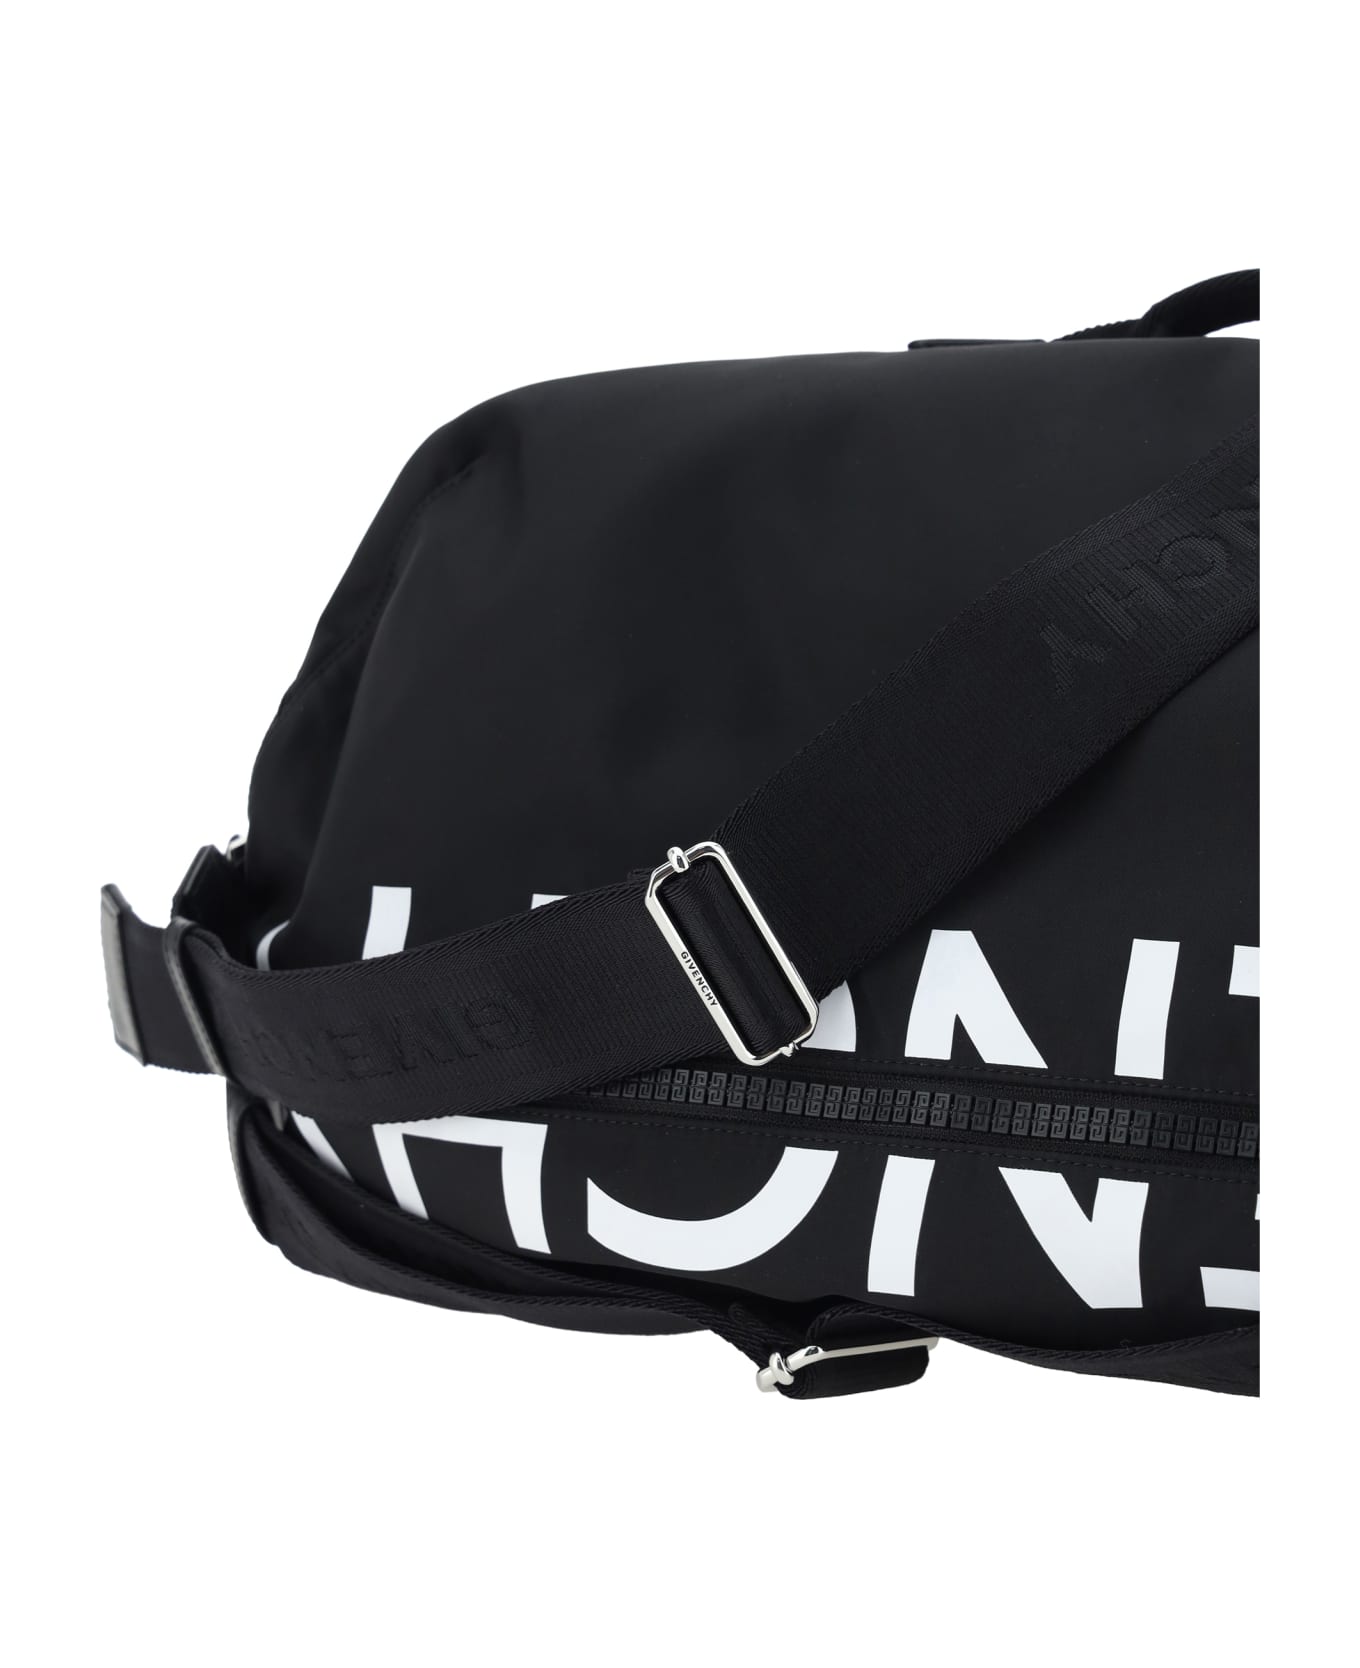 Givenchy G-zip Logo Printed Backpack - Black/white